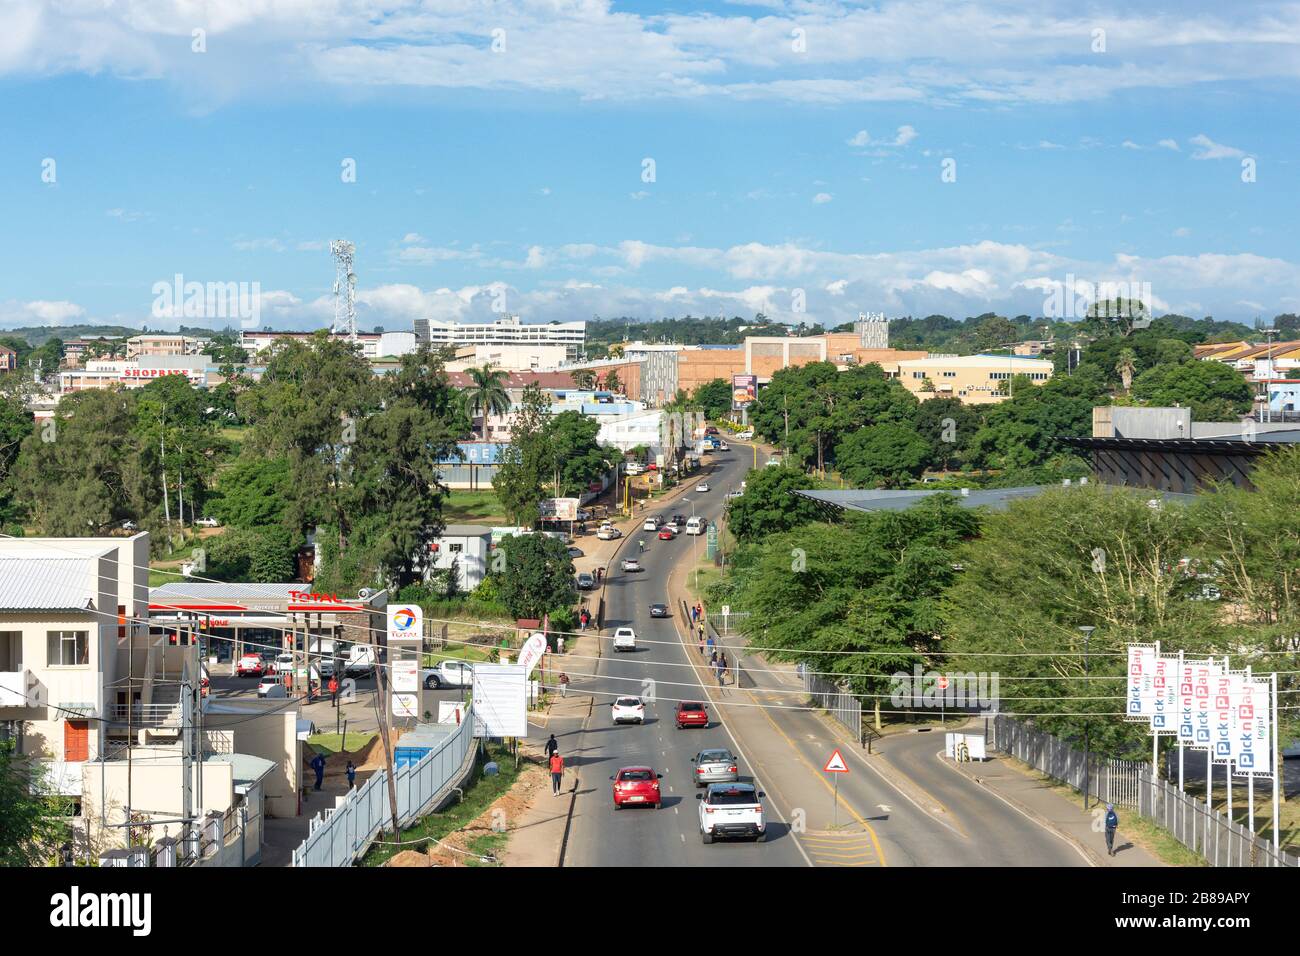 City view showing MR3 highway, Manzini, Manzini Region, Kingdom of Eswatini (Swaziland) Stock Photo